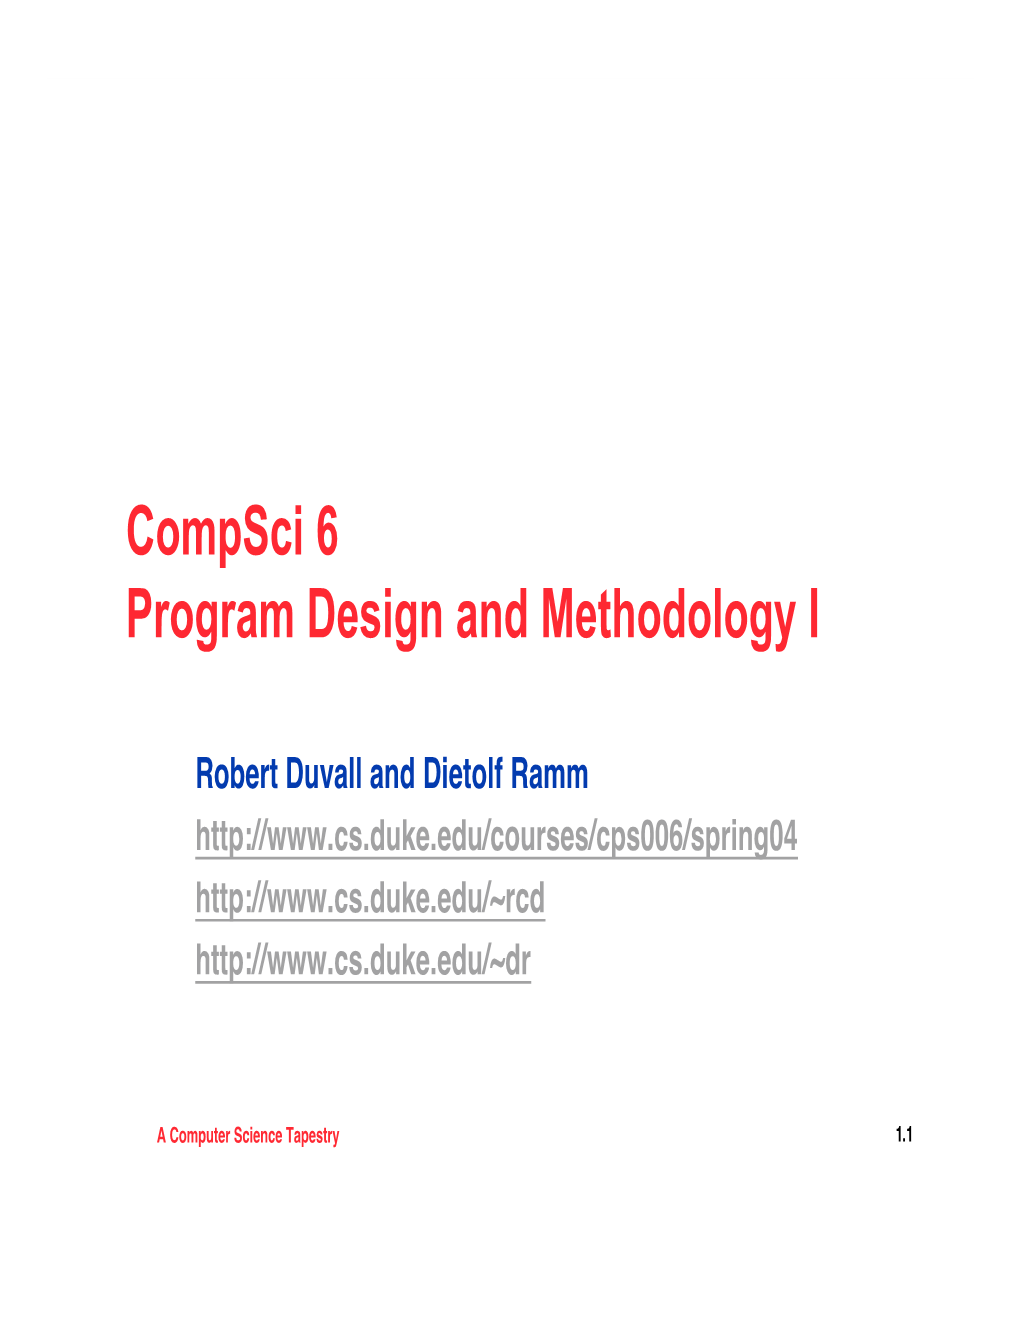 Compsci 6 Program Design and Methodology I